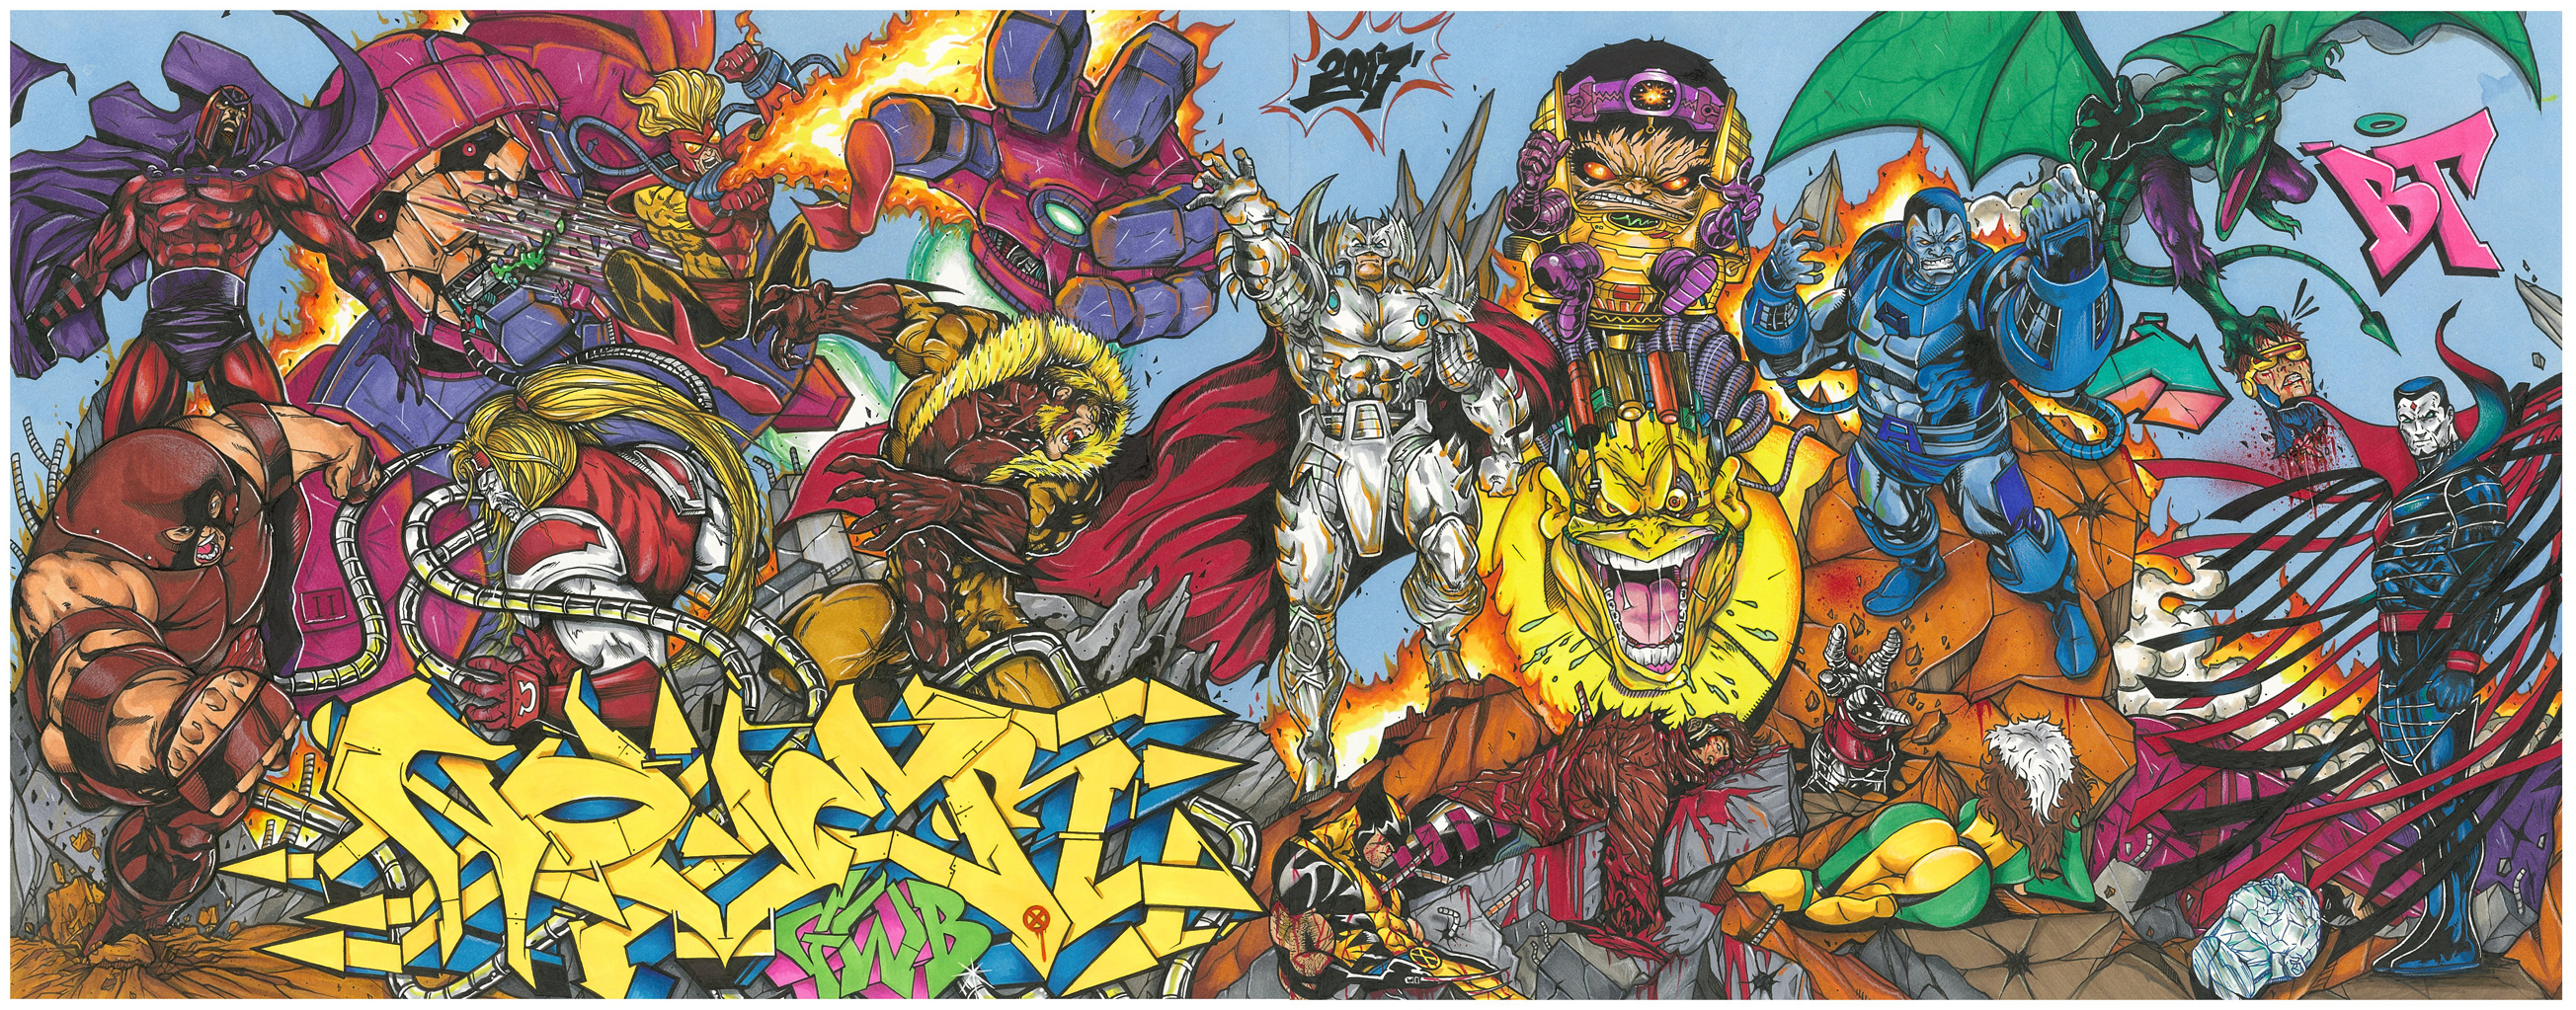 X-Men Villains by Nover, Markers & Pens on Paper, 2018.